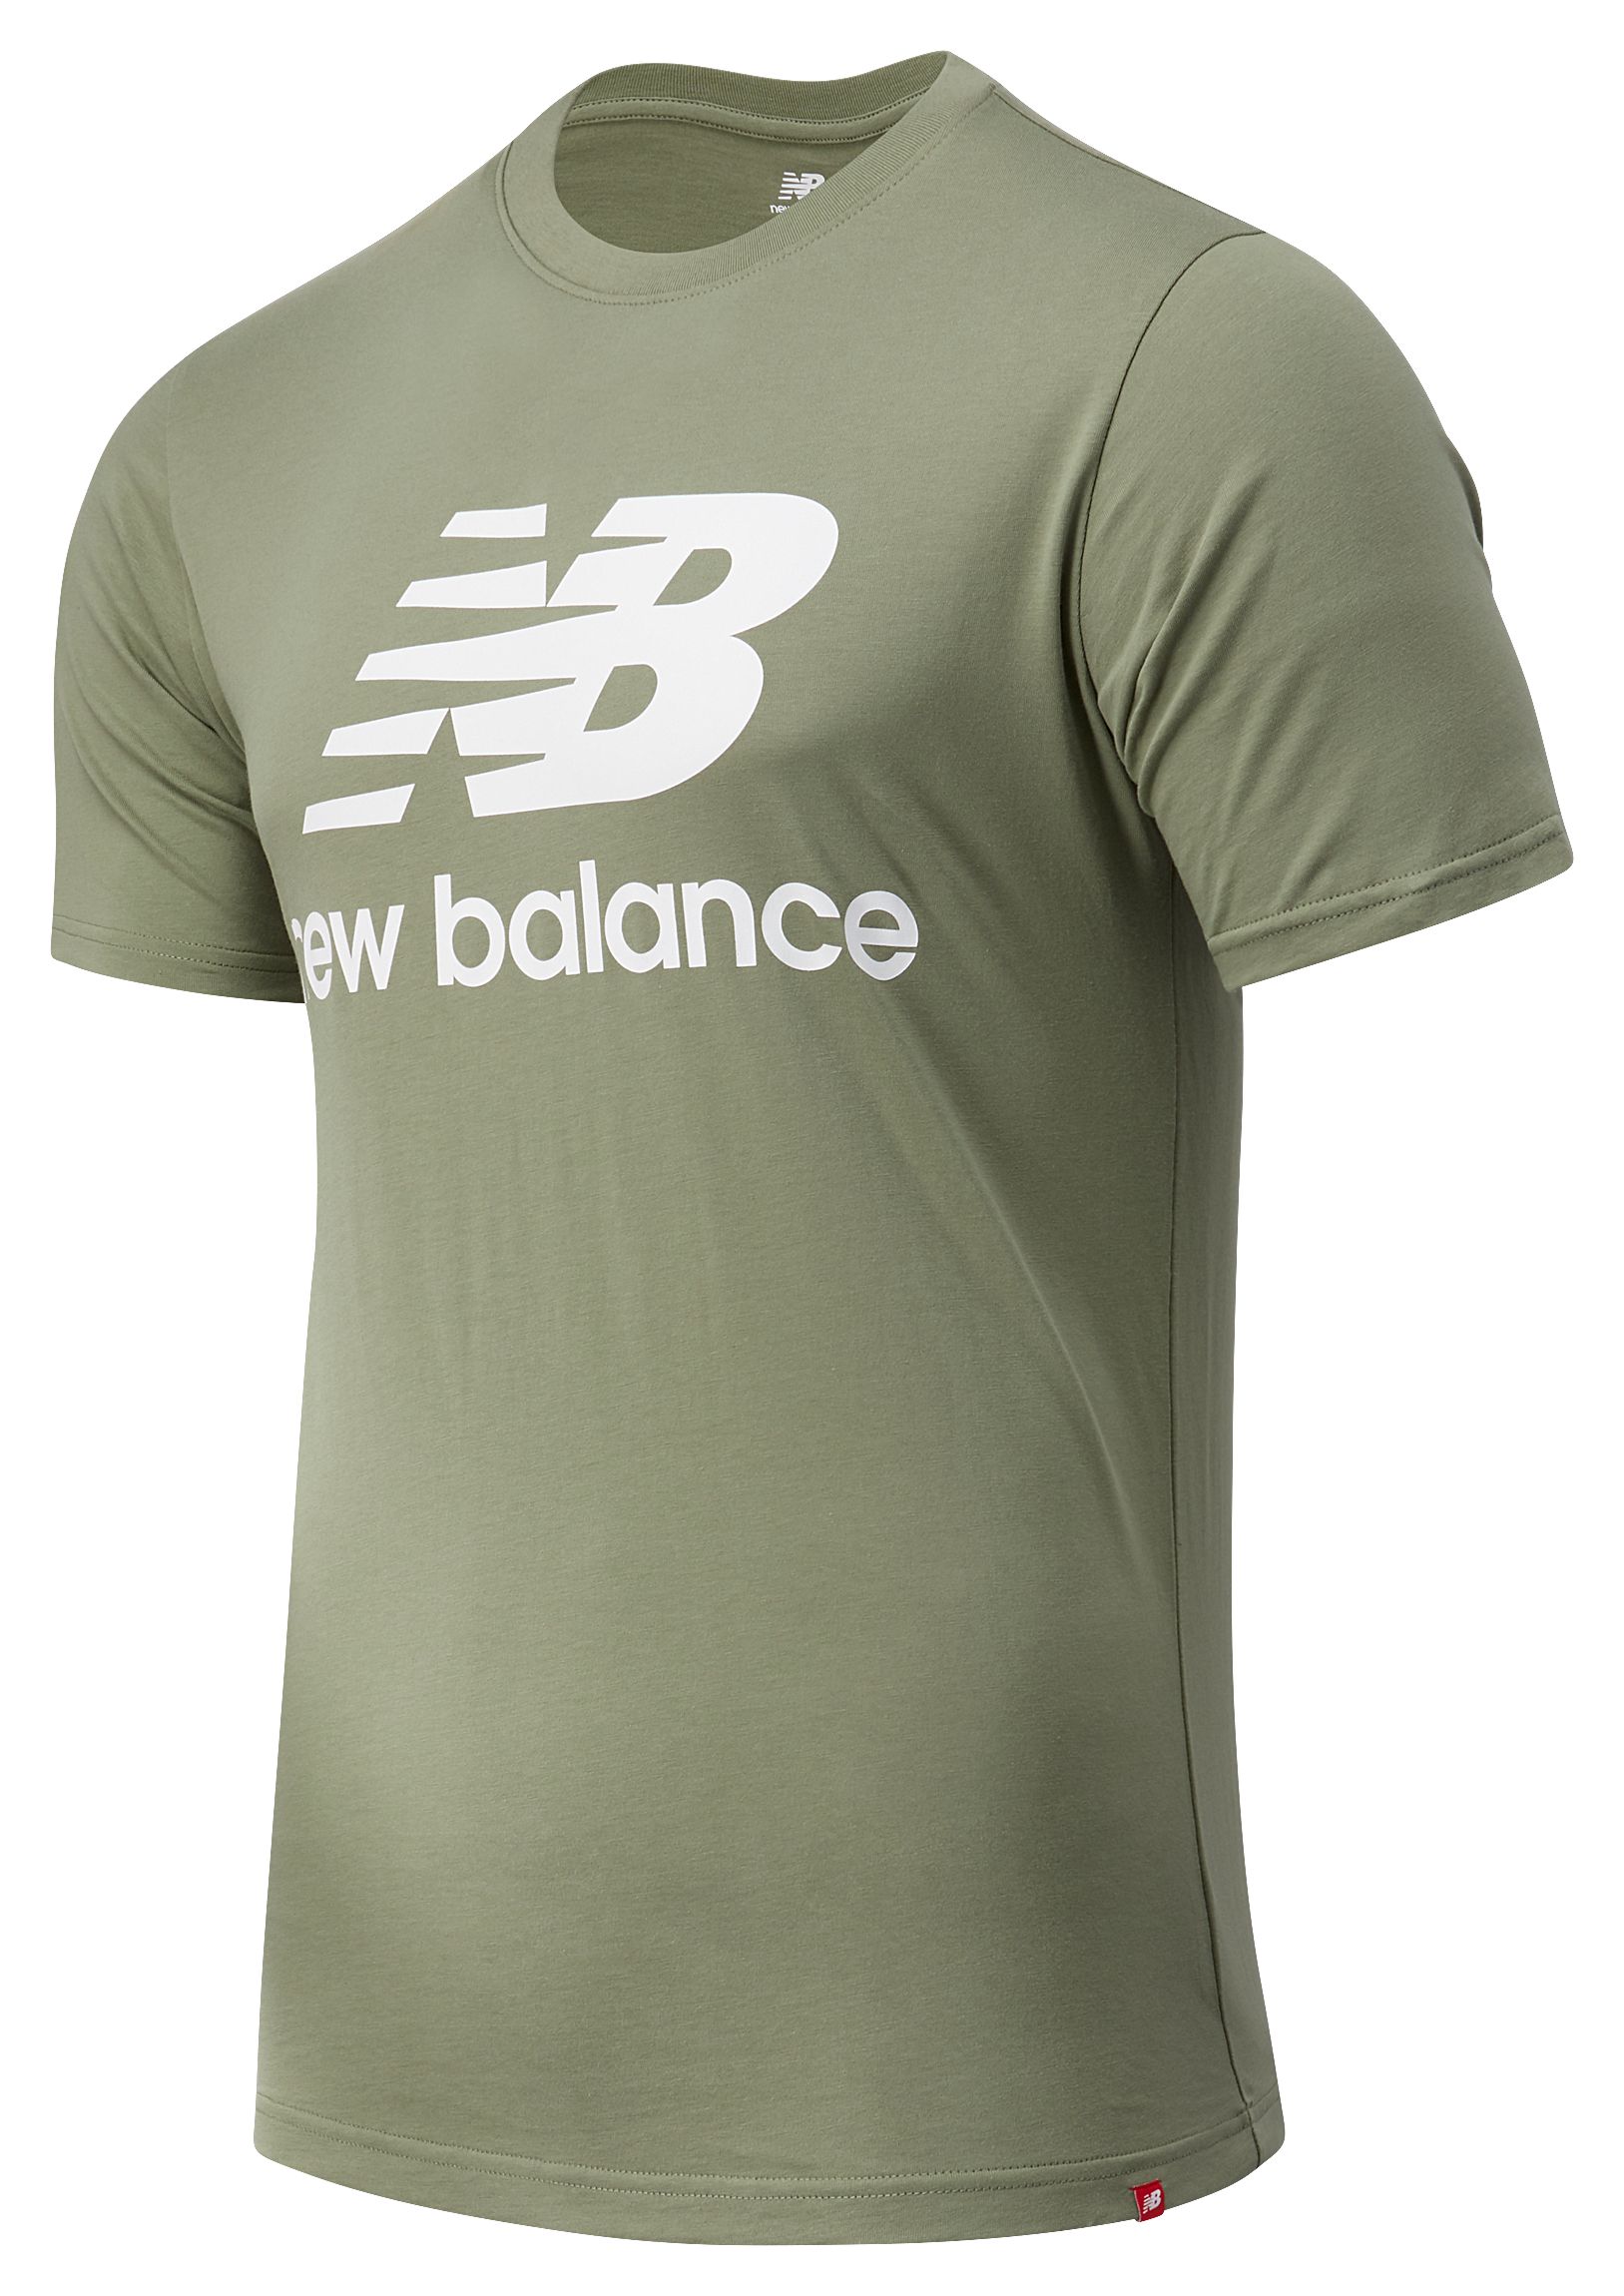 be great shirt new balance